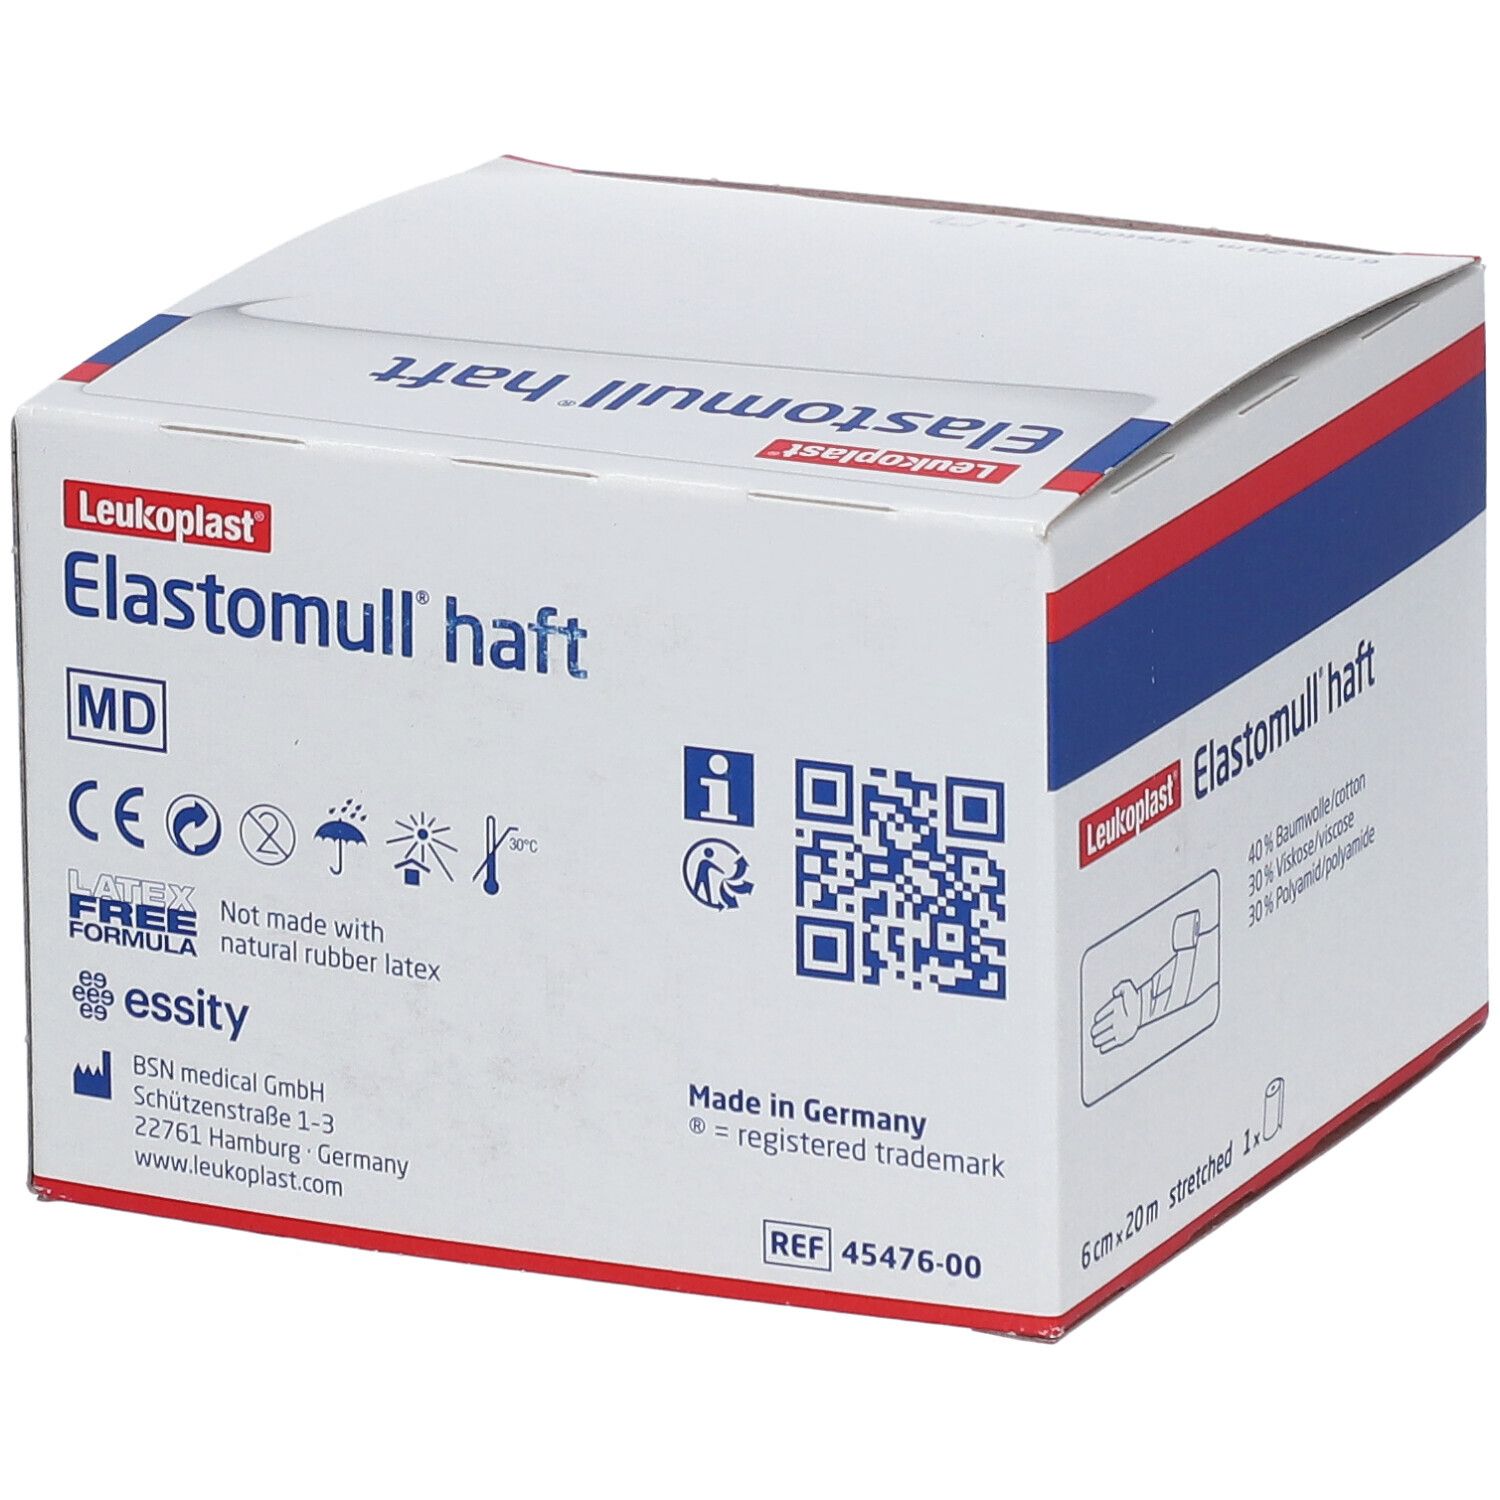 Elastomull Haft 6cm x 20m 45476-00